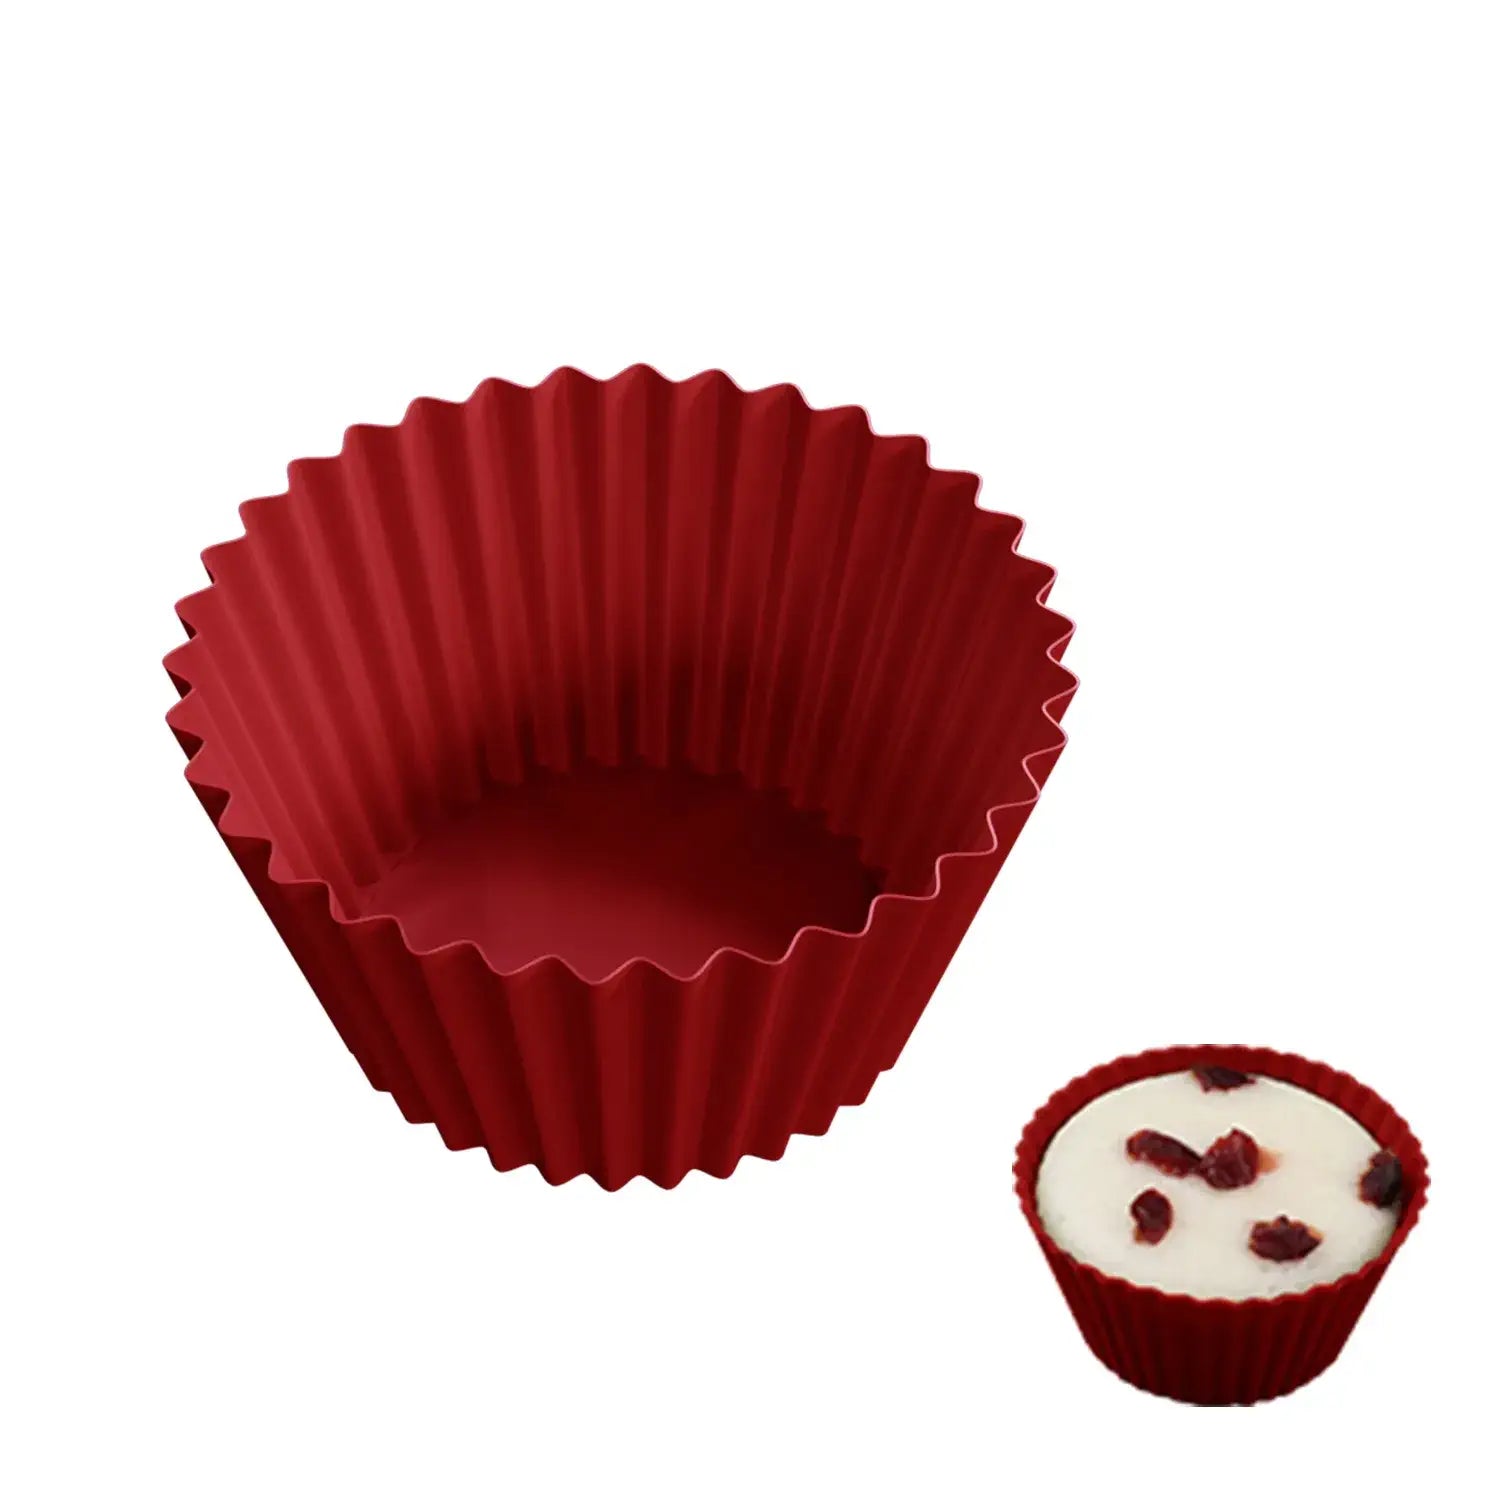 Cup de muffin de silicona reutilizable